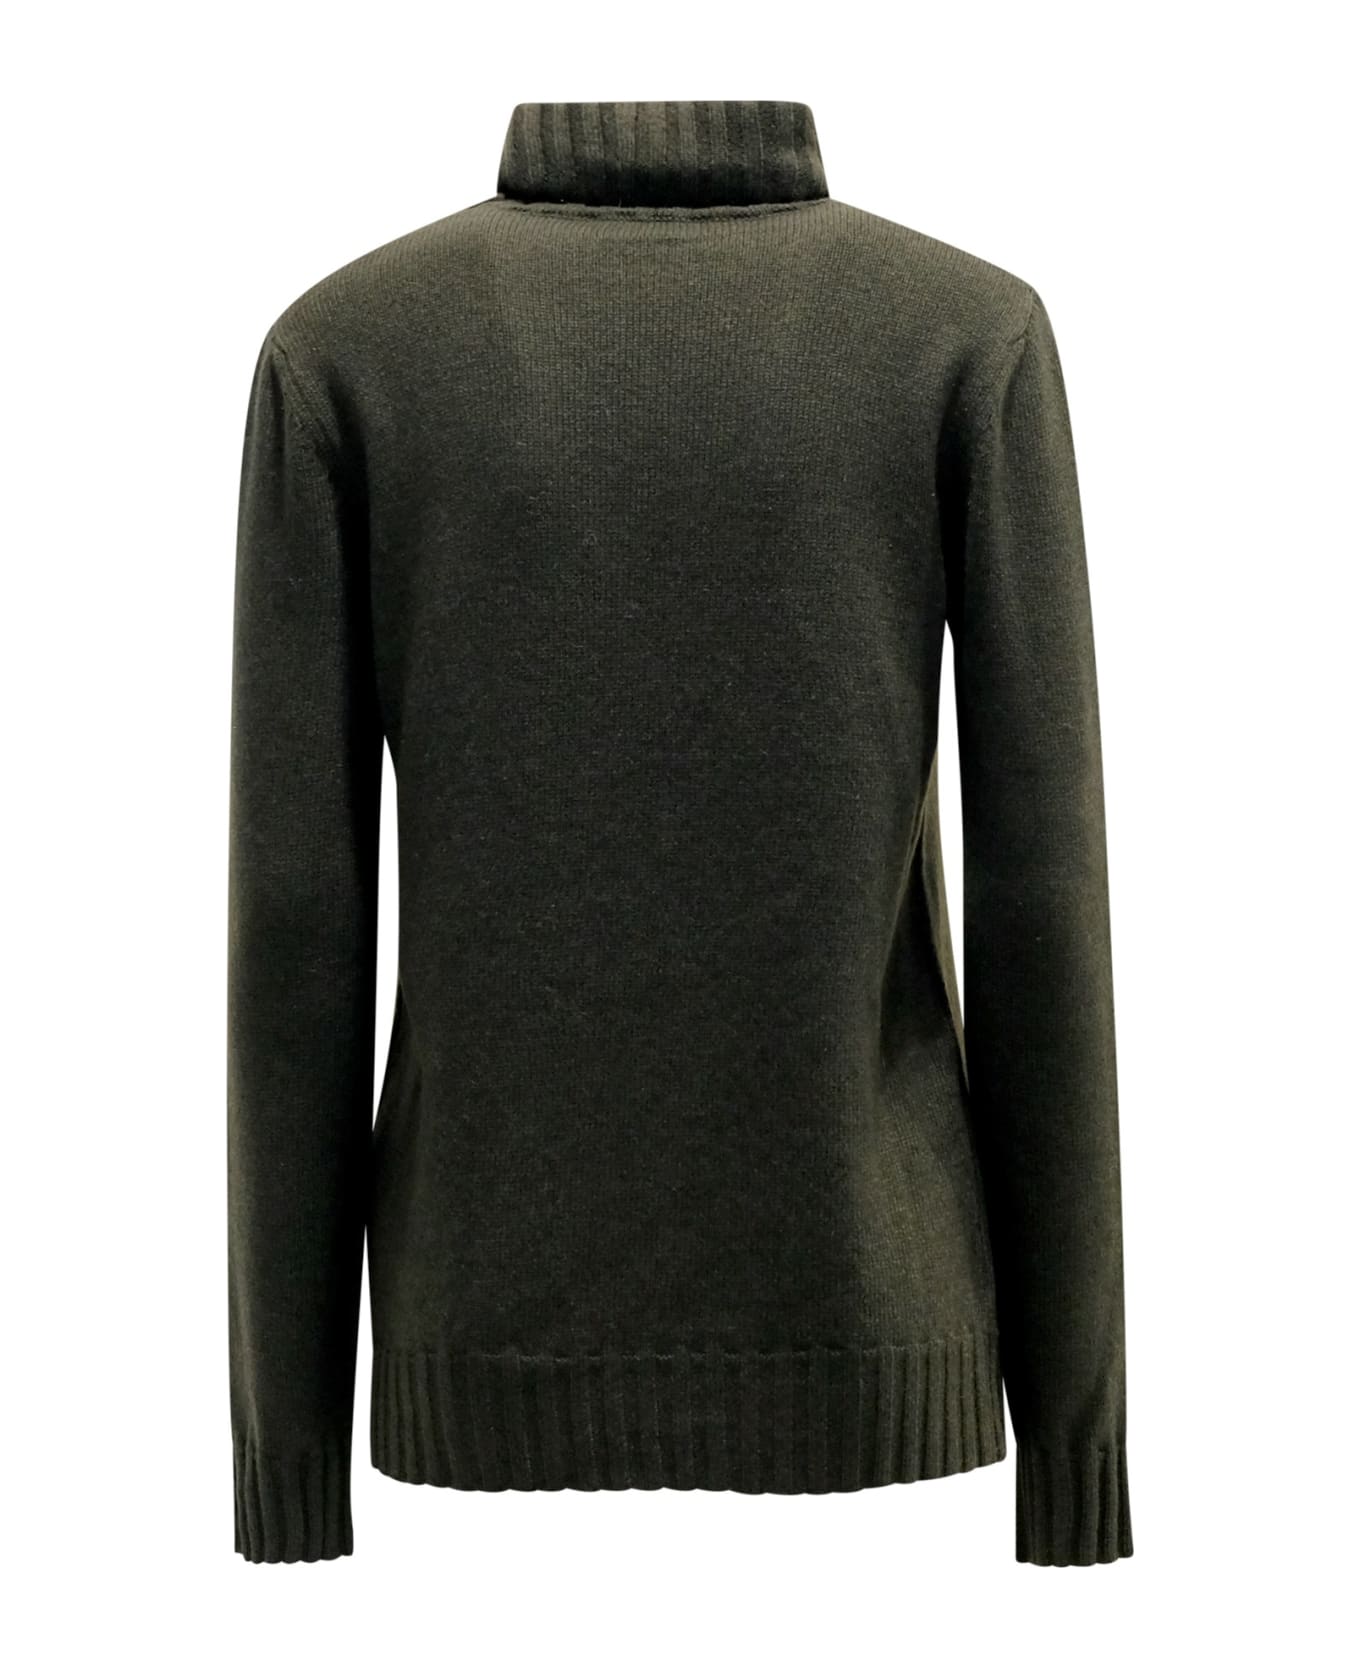 Parosh 807 Lachloe Fantasy Olive Sweater